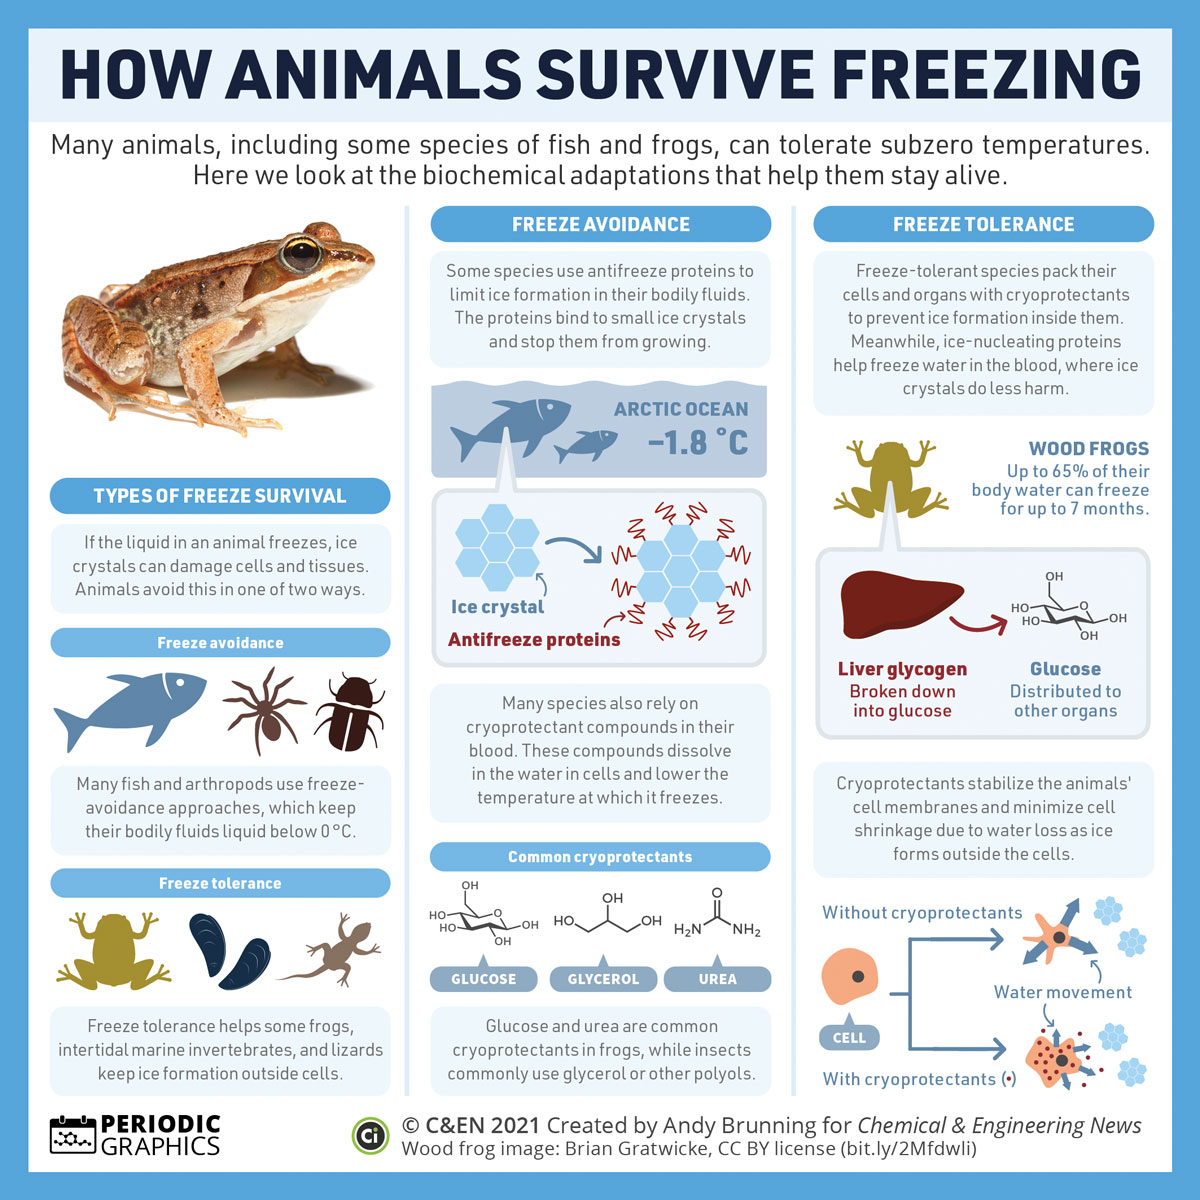 Periodic Graphics: How animals survive freezing